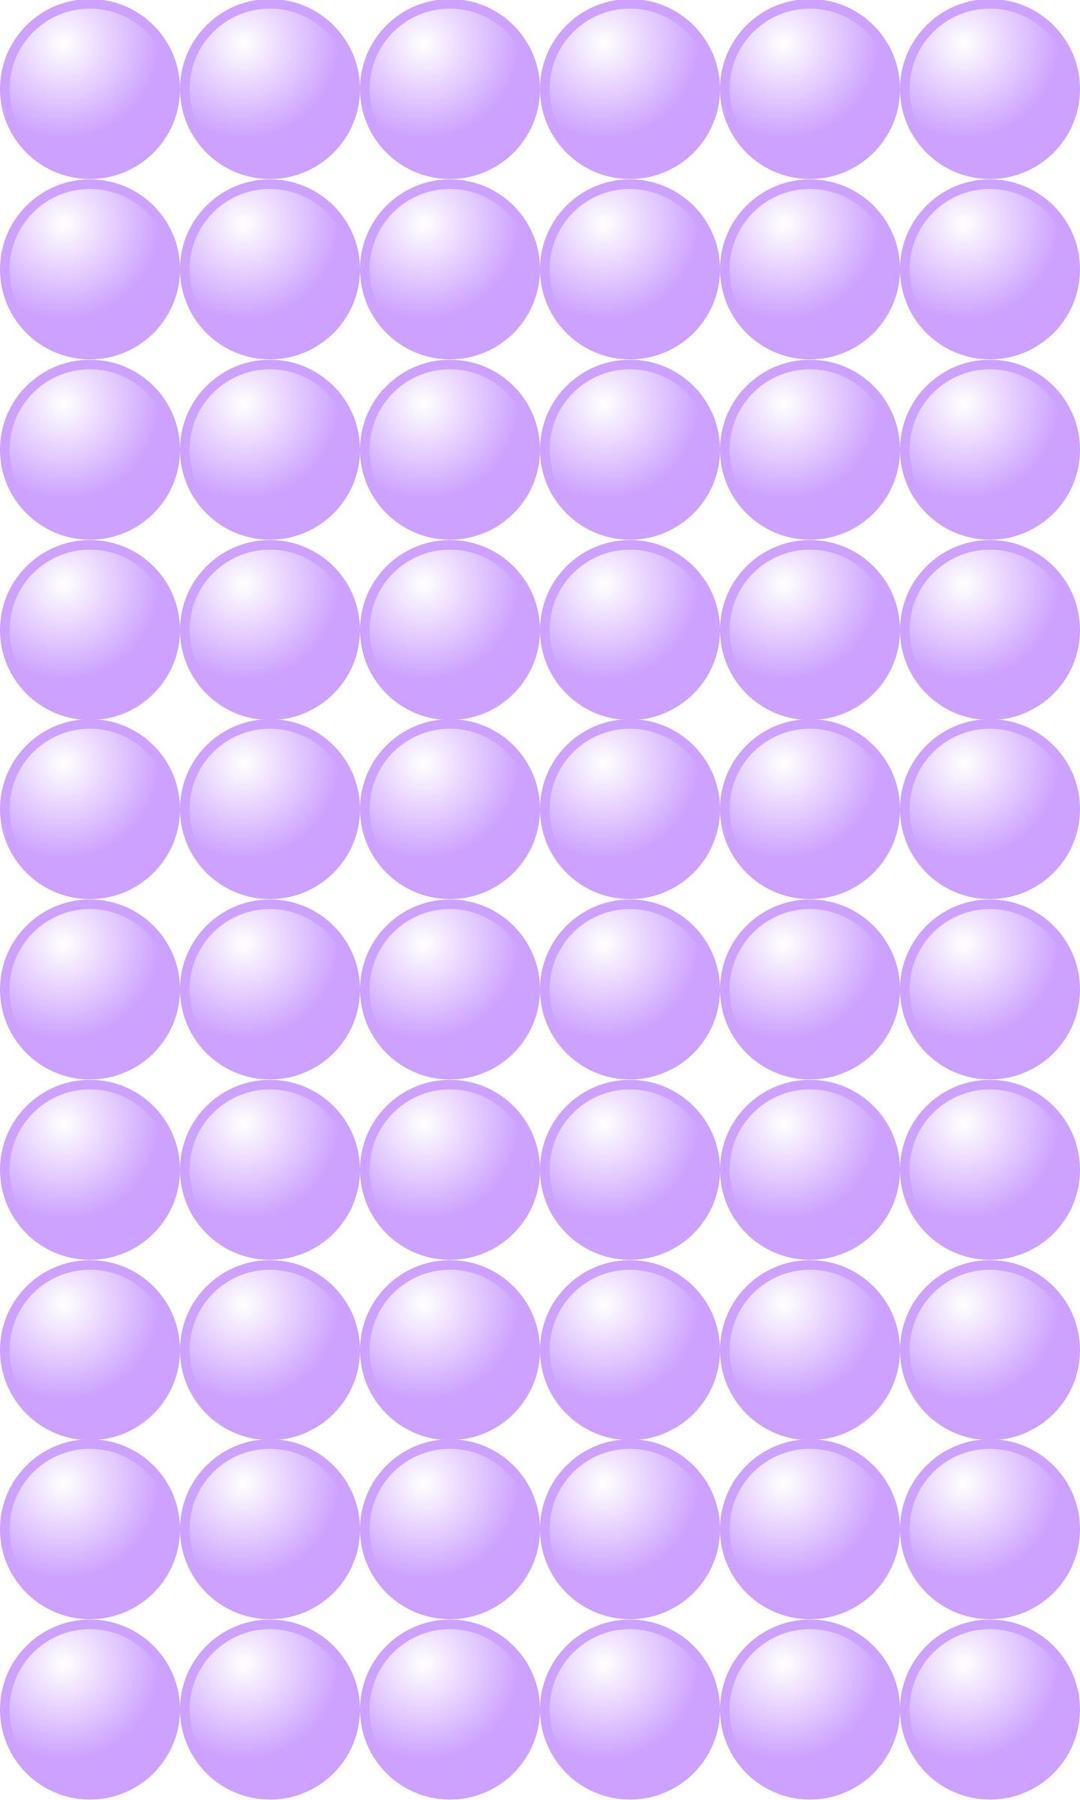 Beads quantitative picture for multiplication 10x6 png transparent